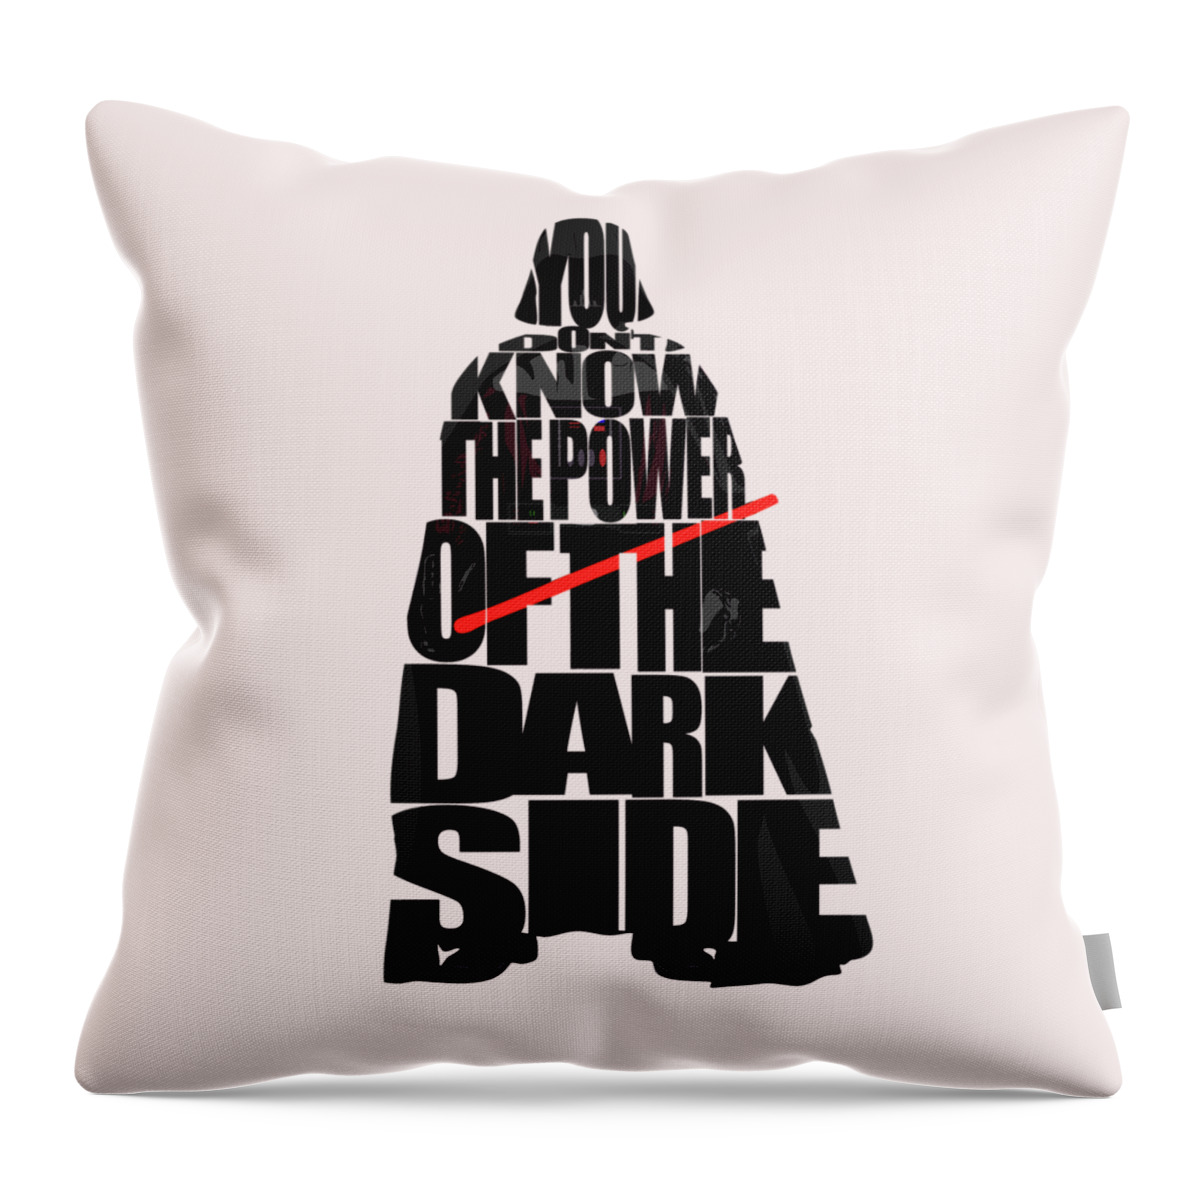 Darth Vader Throw Pillow featuring the digital art Star Wars Inspired Darth Vader Artwork by Inspirowl Design